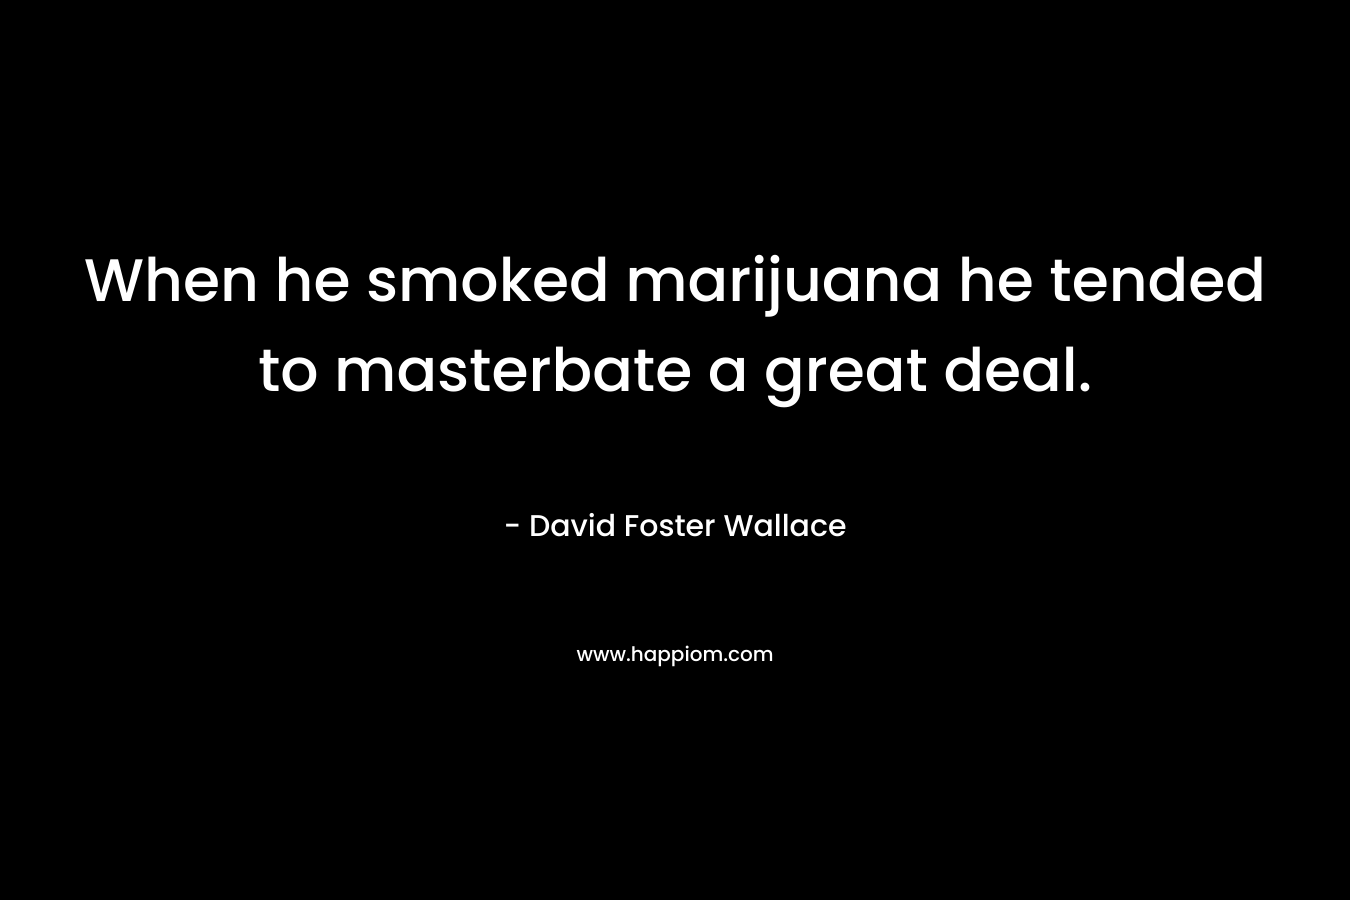 When he smoked marijuana he tended to masterbate a great deal.